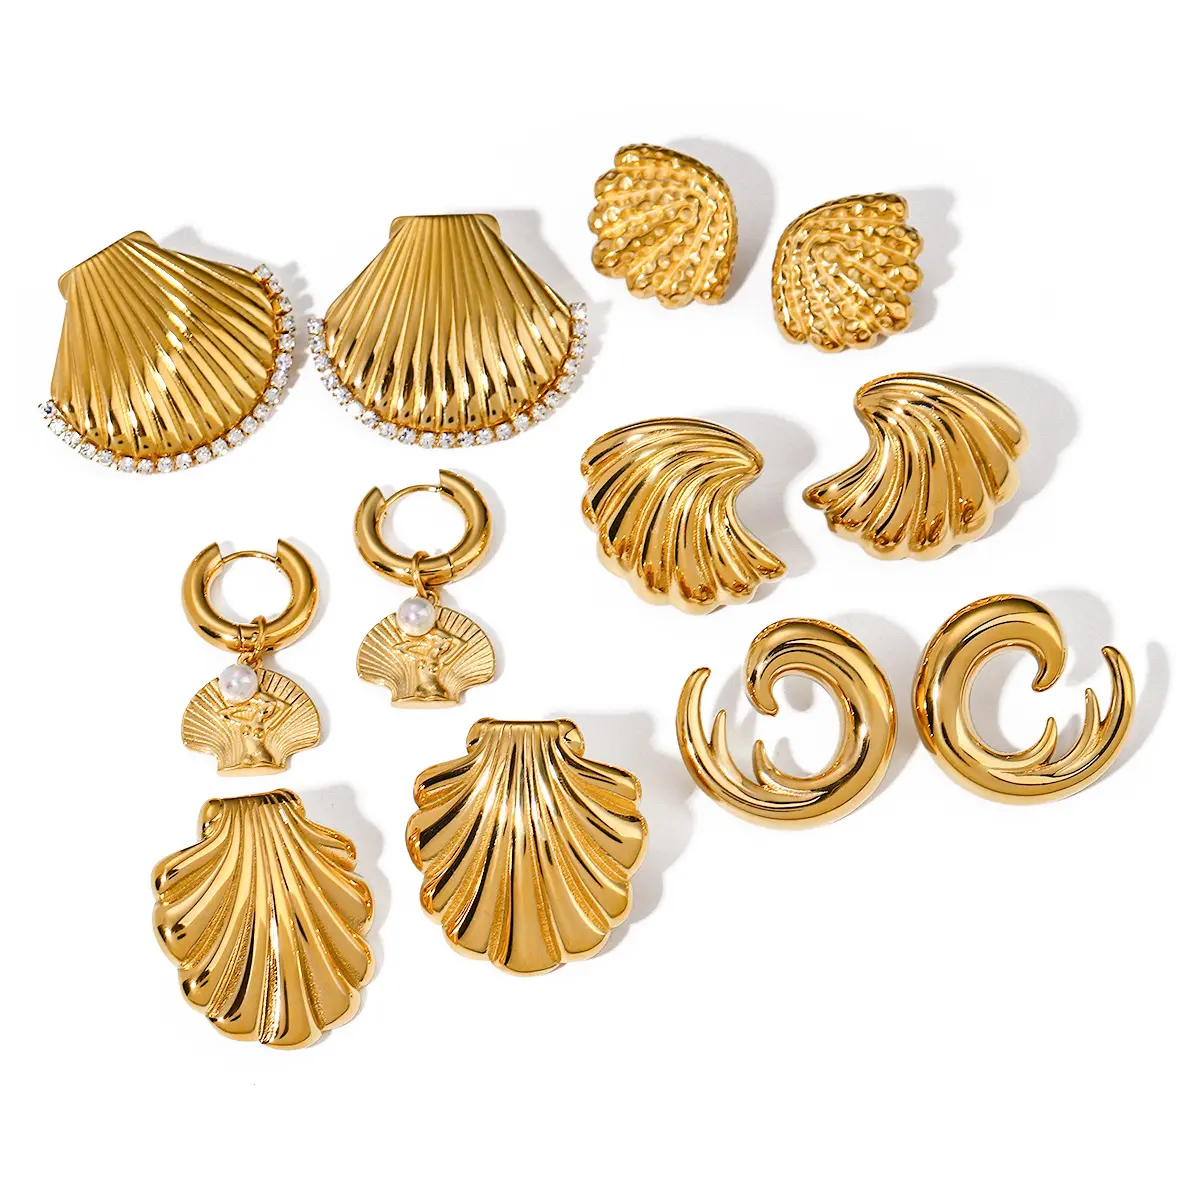 Luxury Zircon Shell Design Earrings For Women's Waterproof Gold Plated Jewelry Stainless Steel Ocean Collection Jewelry